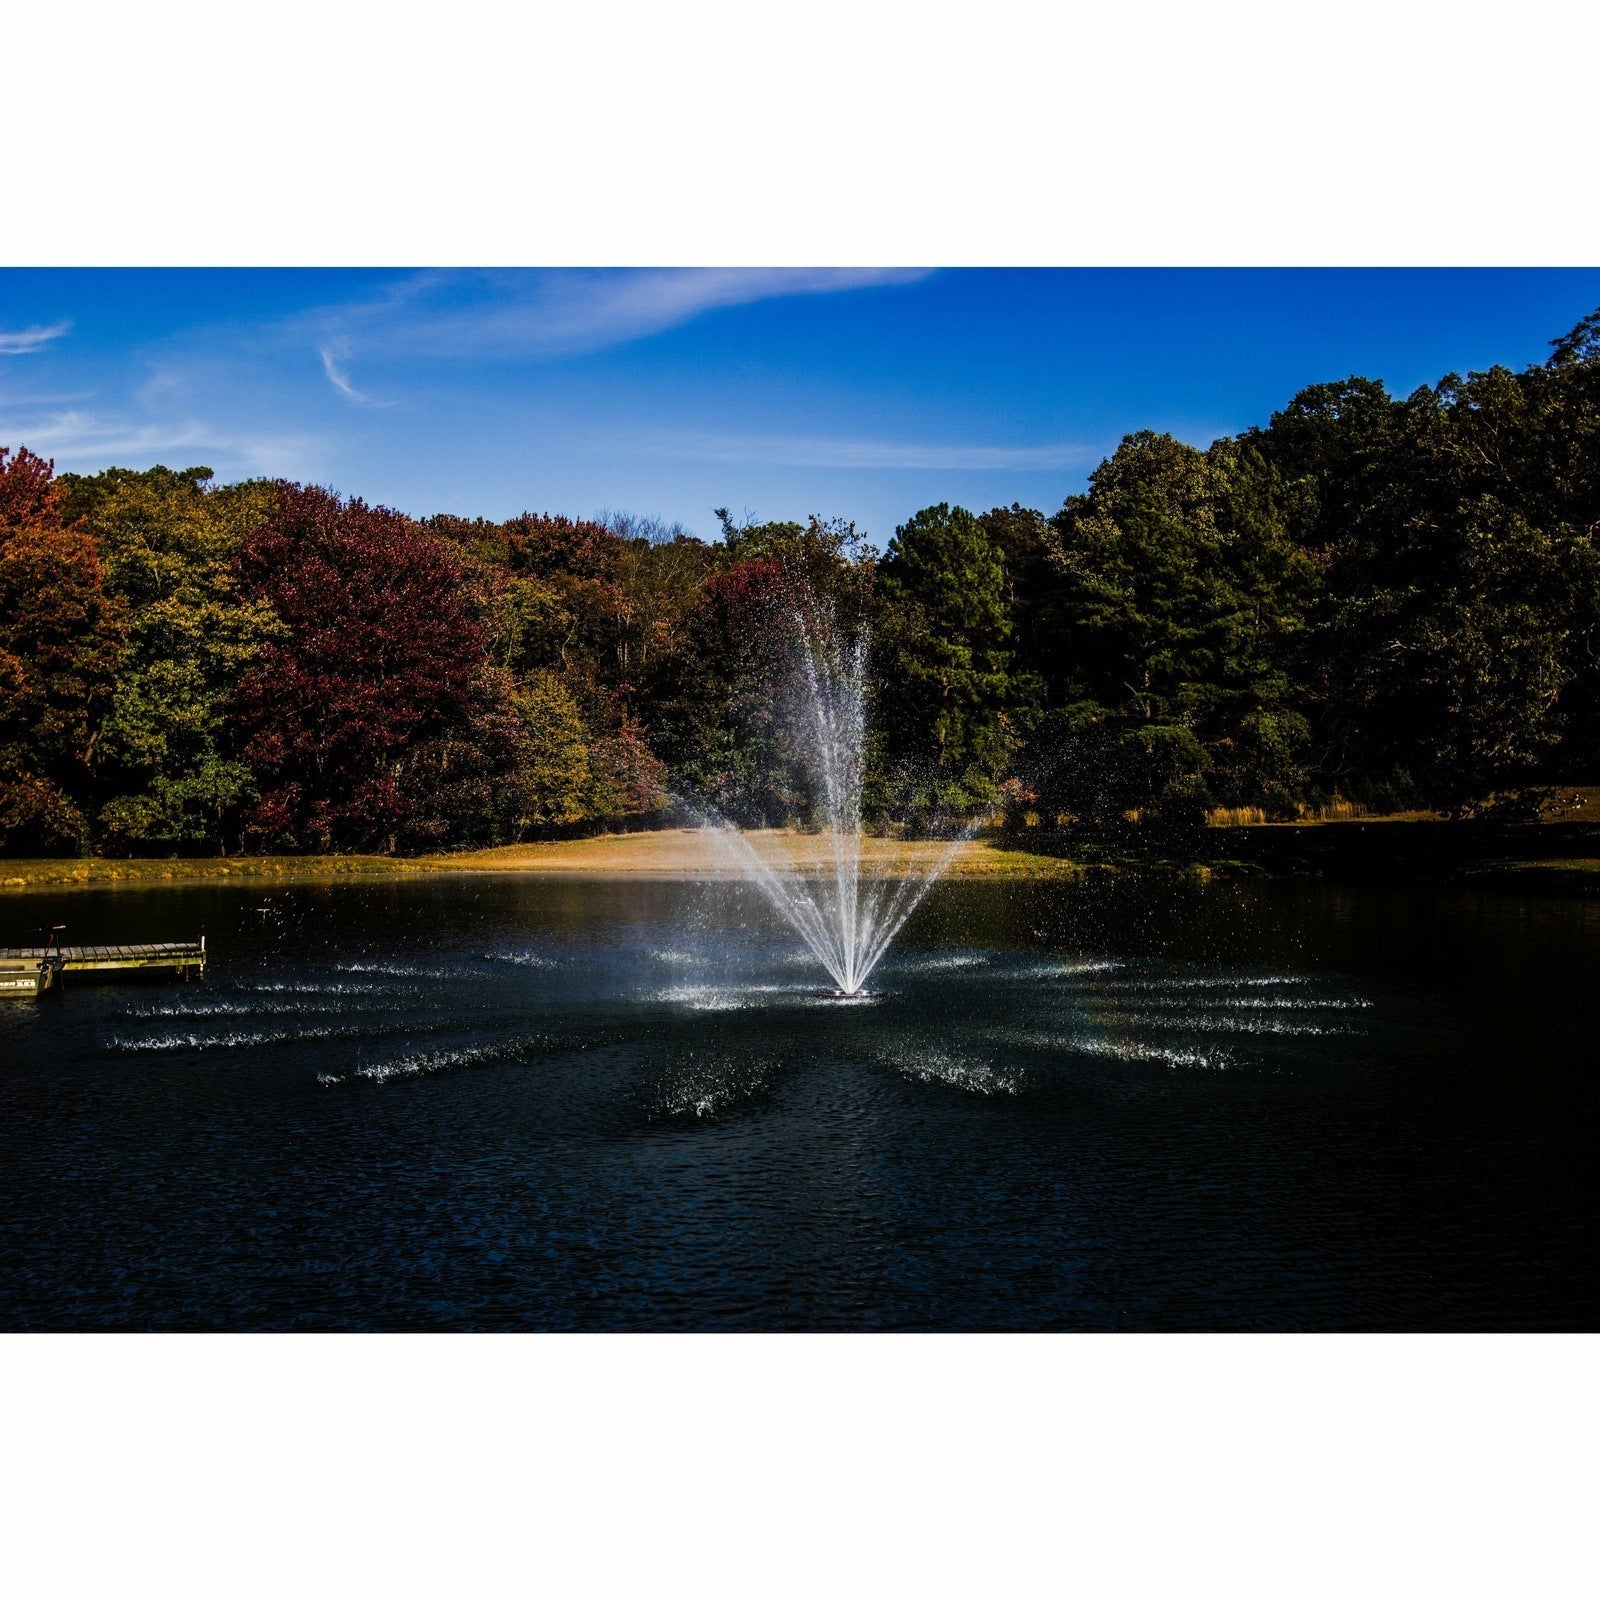 Bearon Aquatics Artemis Fountain - American Pond Supplies Bearon Aquatics Pond Fountains Pond Fountains